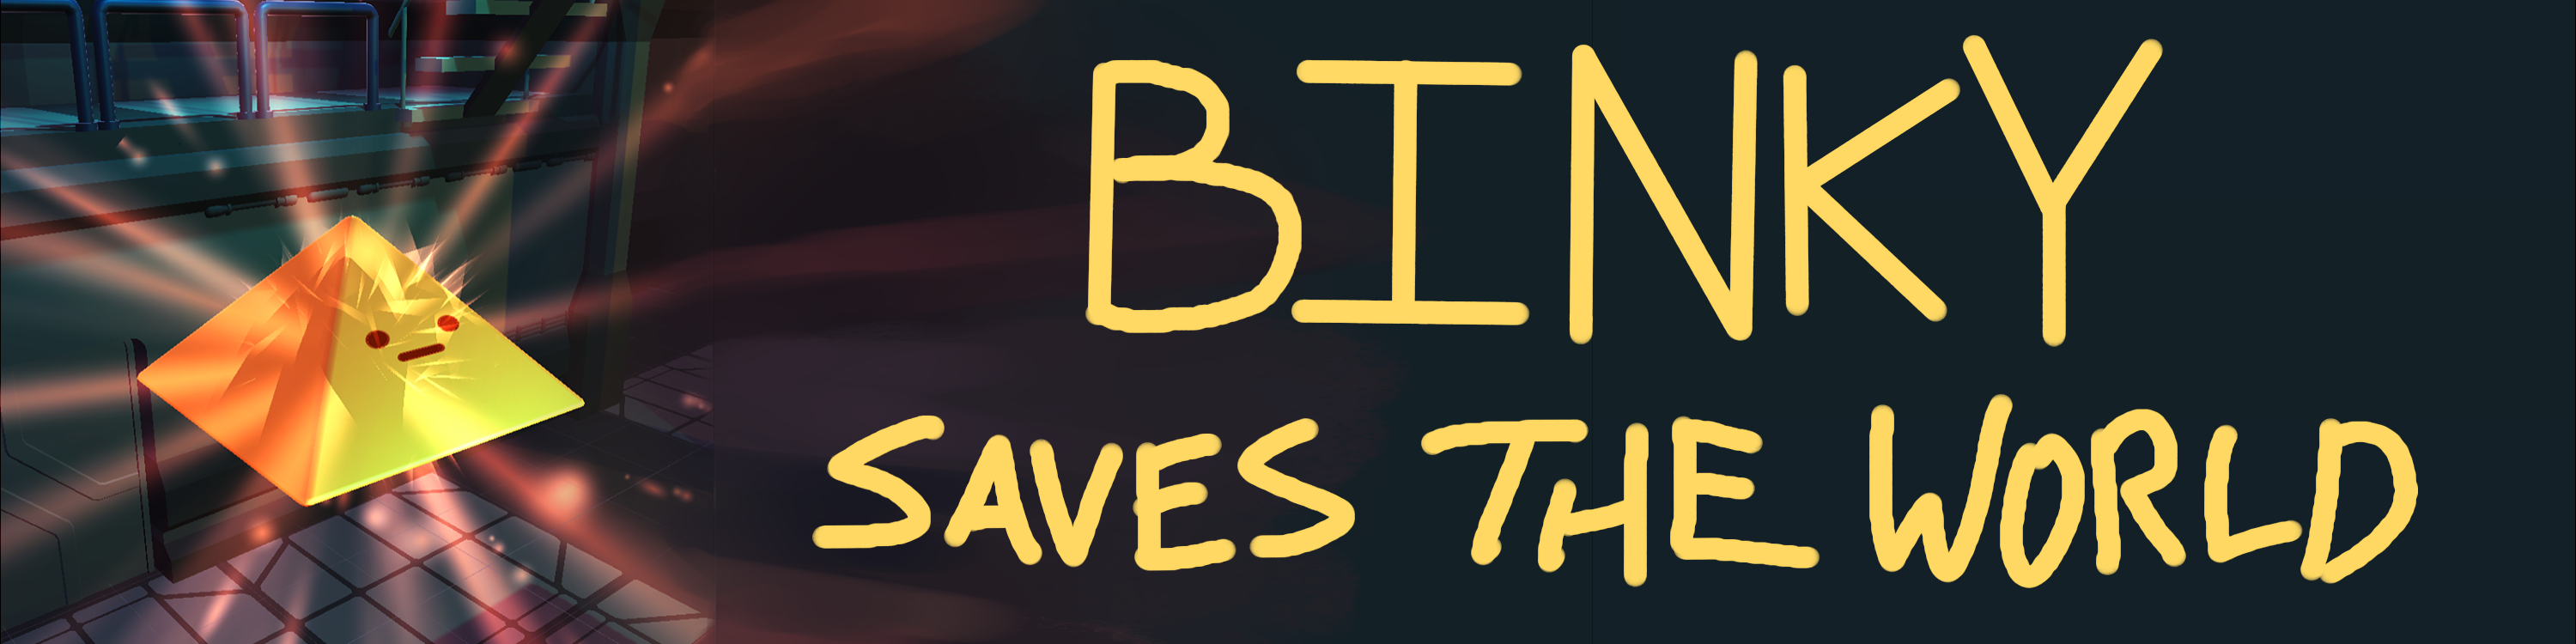 Binky Saves the World